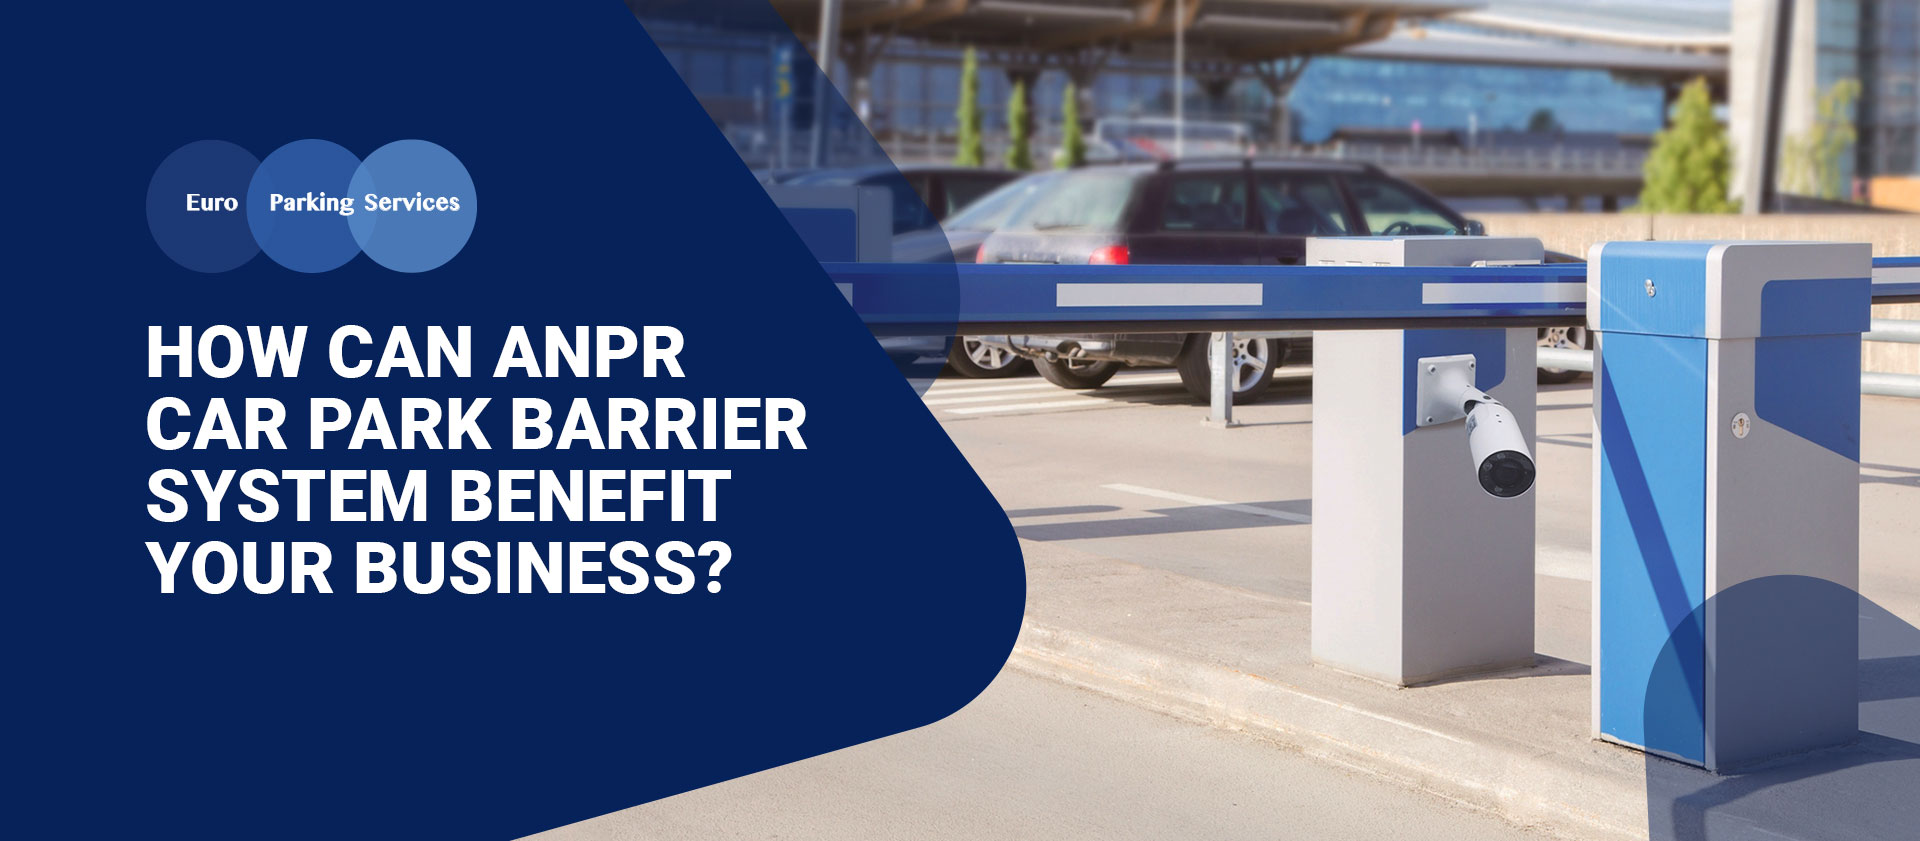 ANPR Car Park Barrier System Benefit